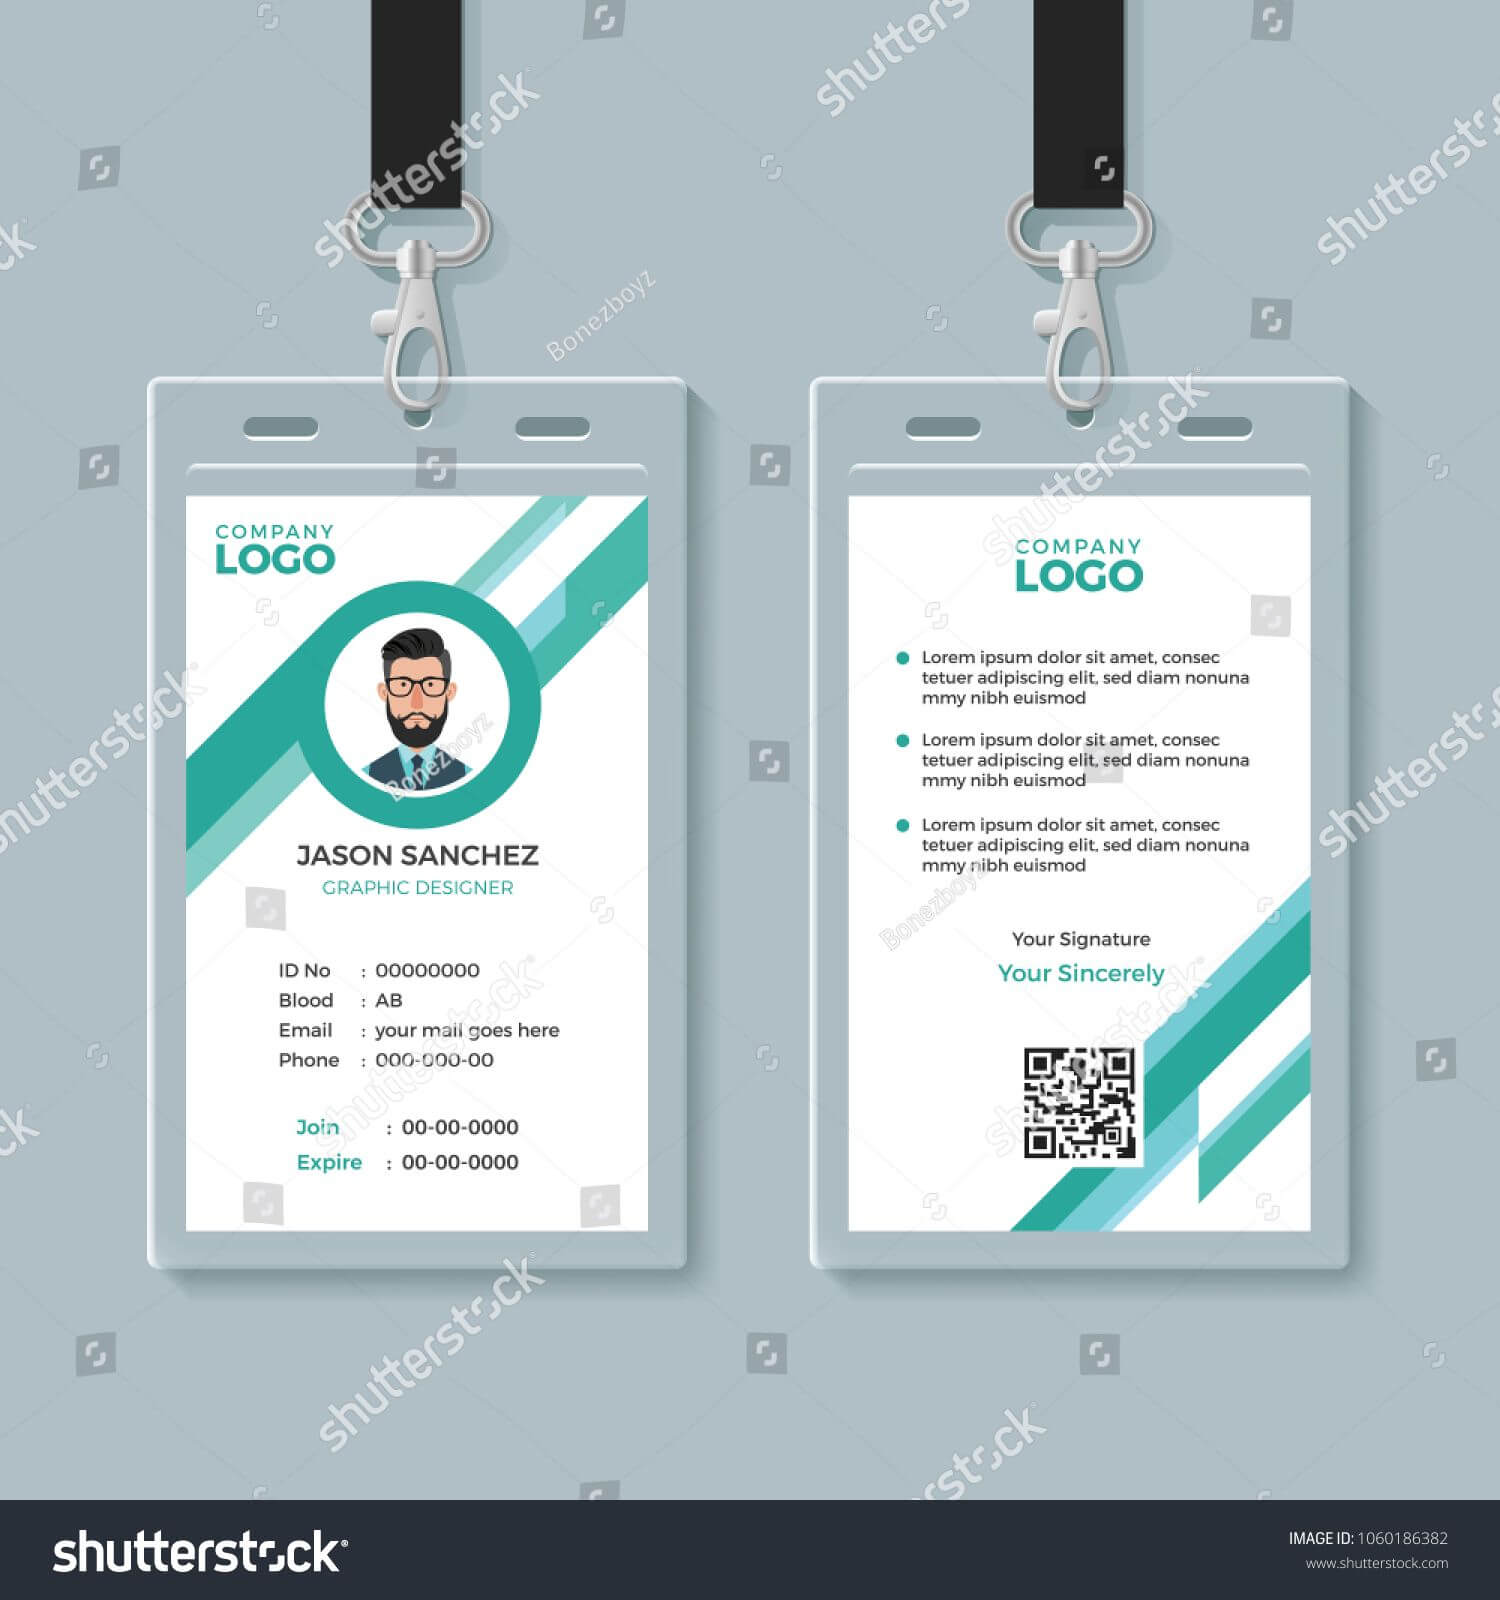 Company Identity Card Design Template Identity#company#card In Company Id Card Design Template